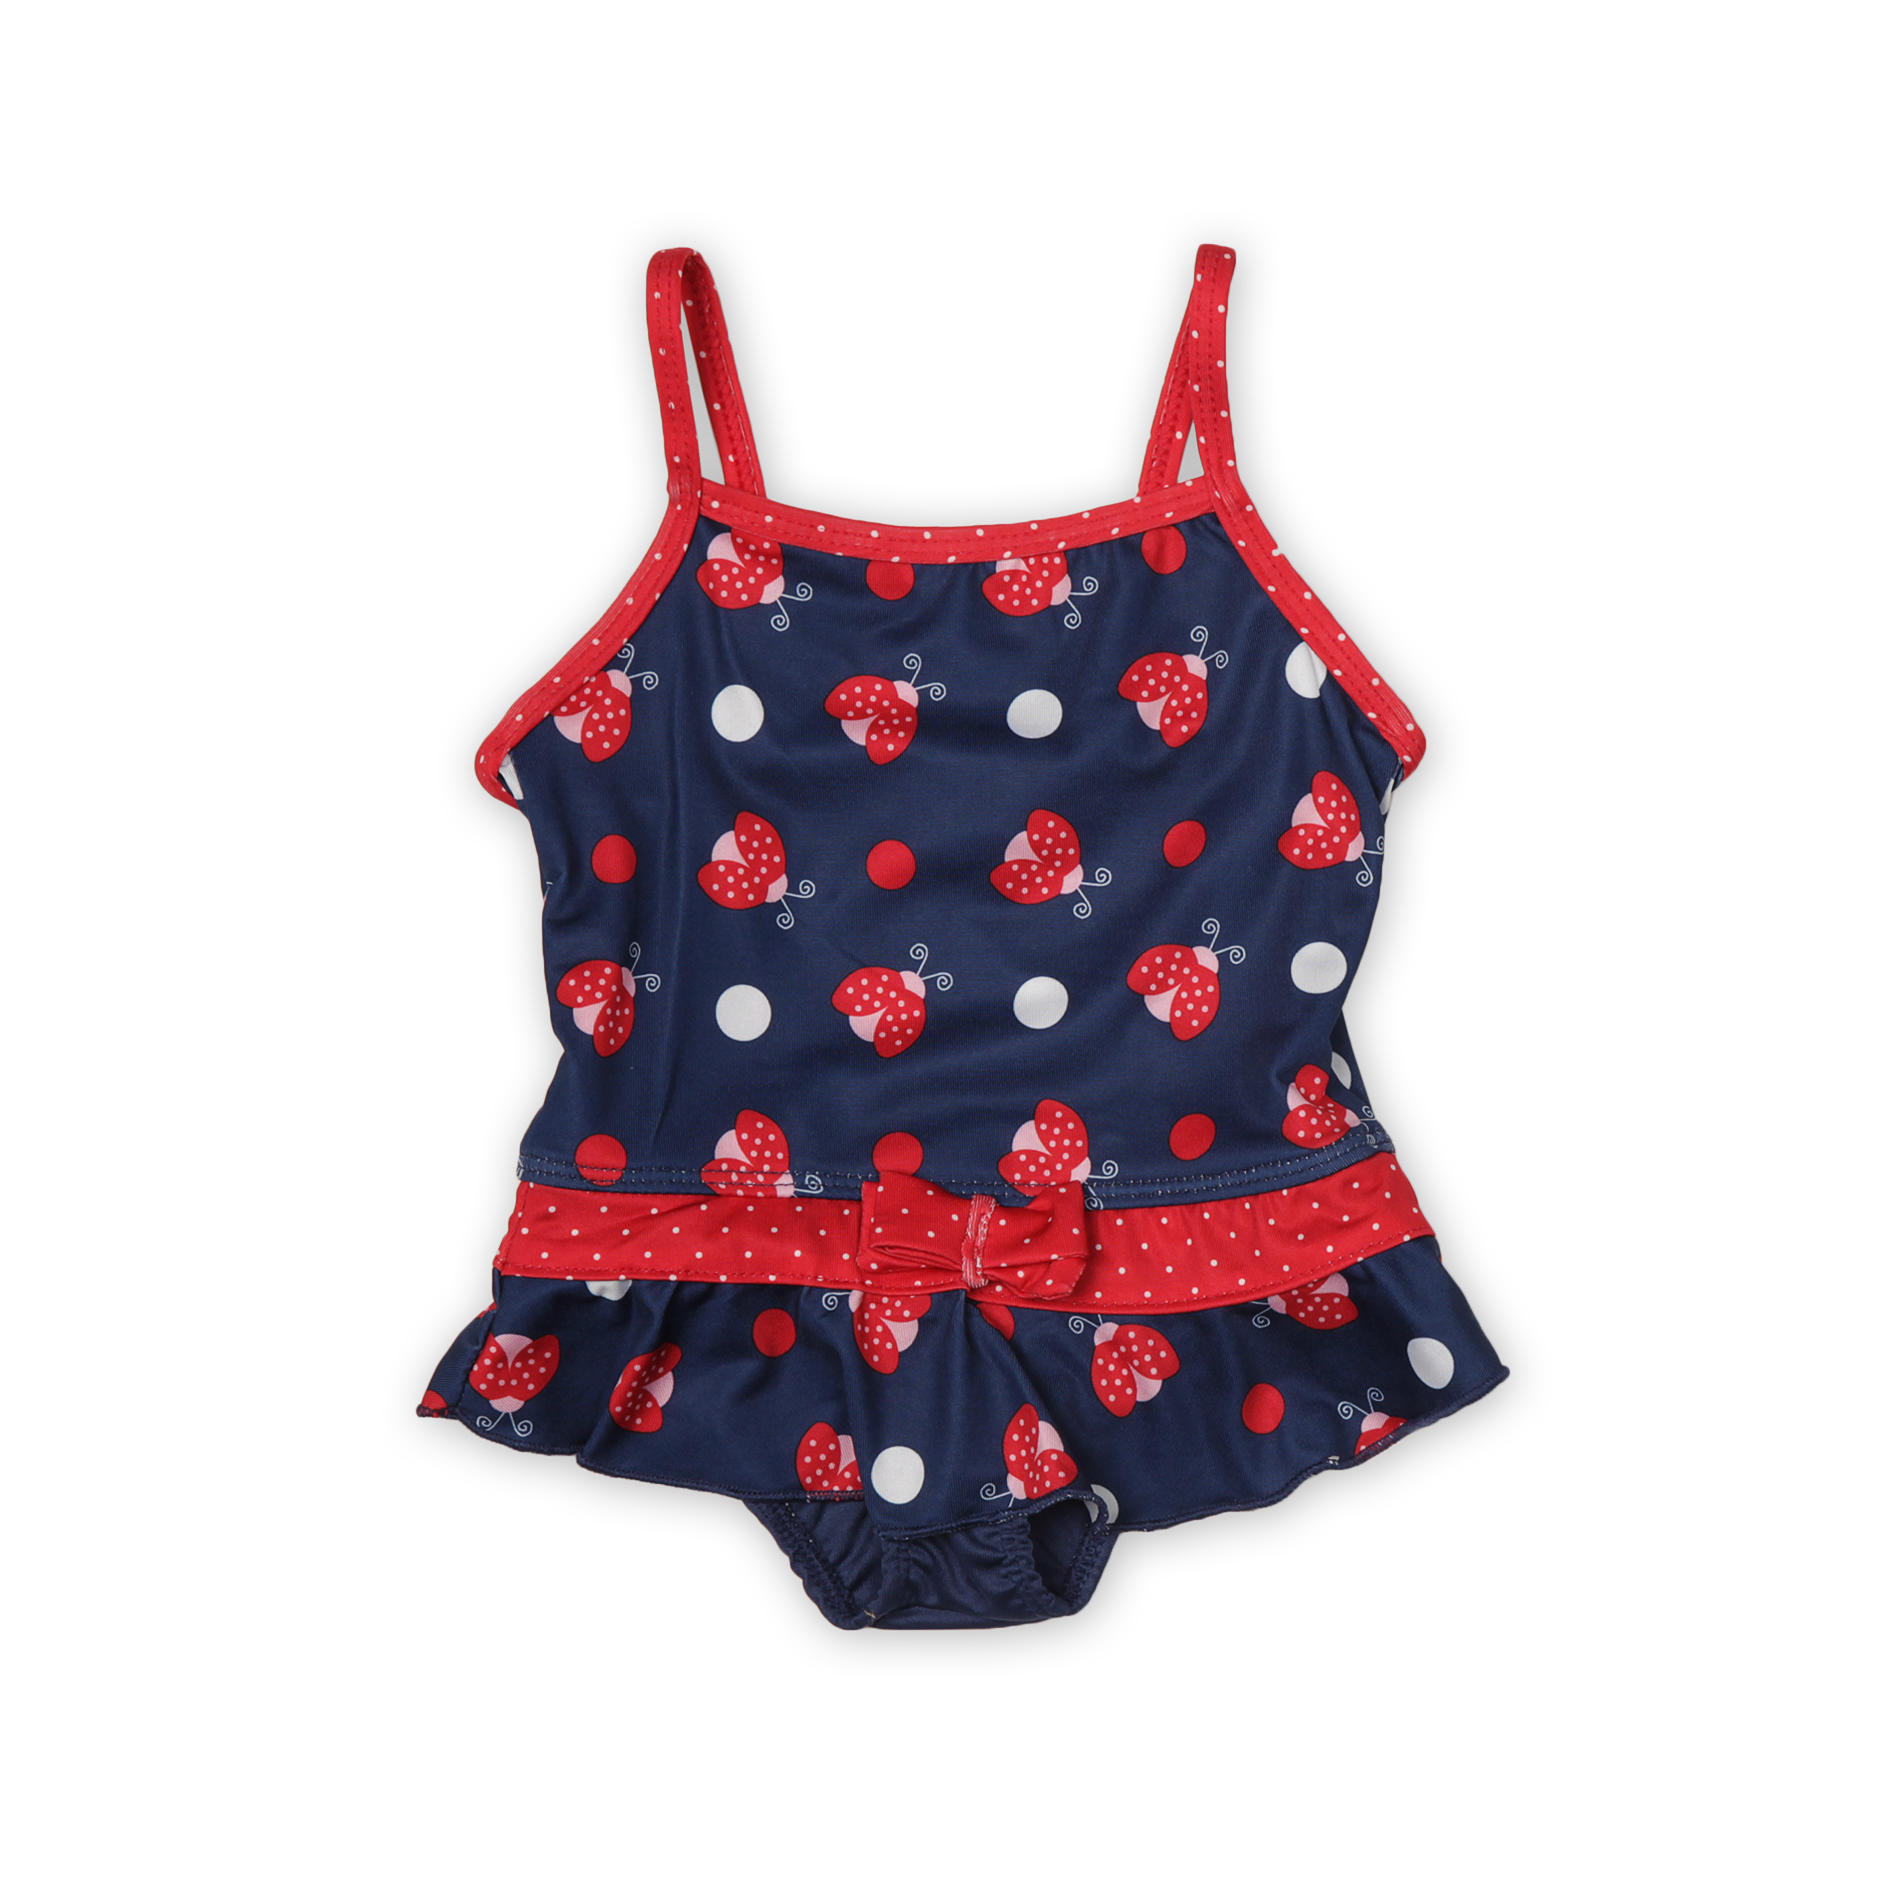 Pink Platinum Infant & Toddler Girl's One-Piece Swimsuit - Ladybug Dots